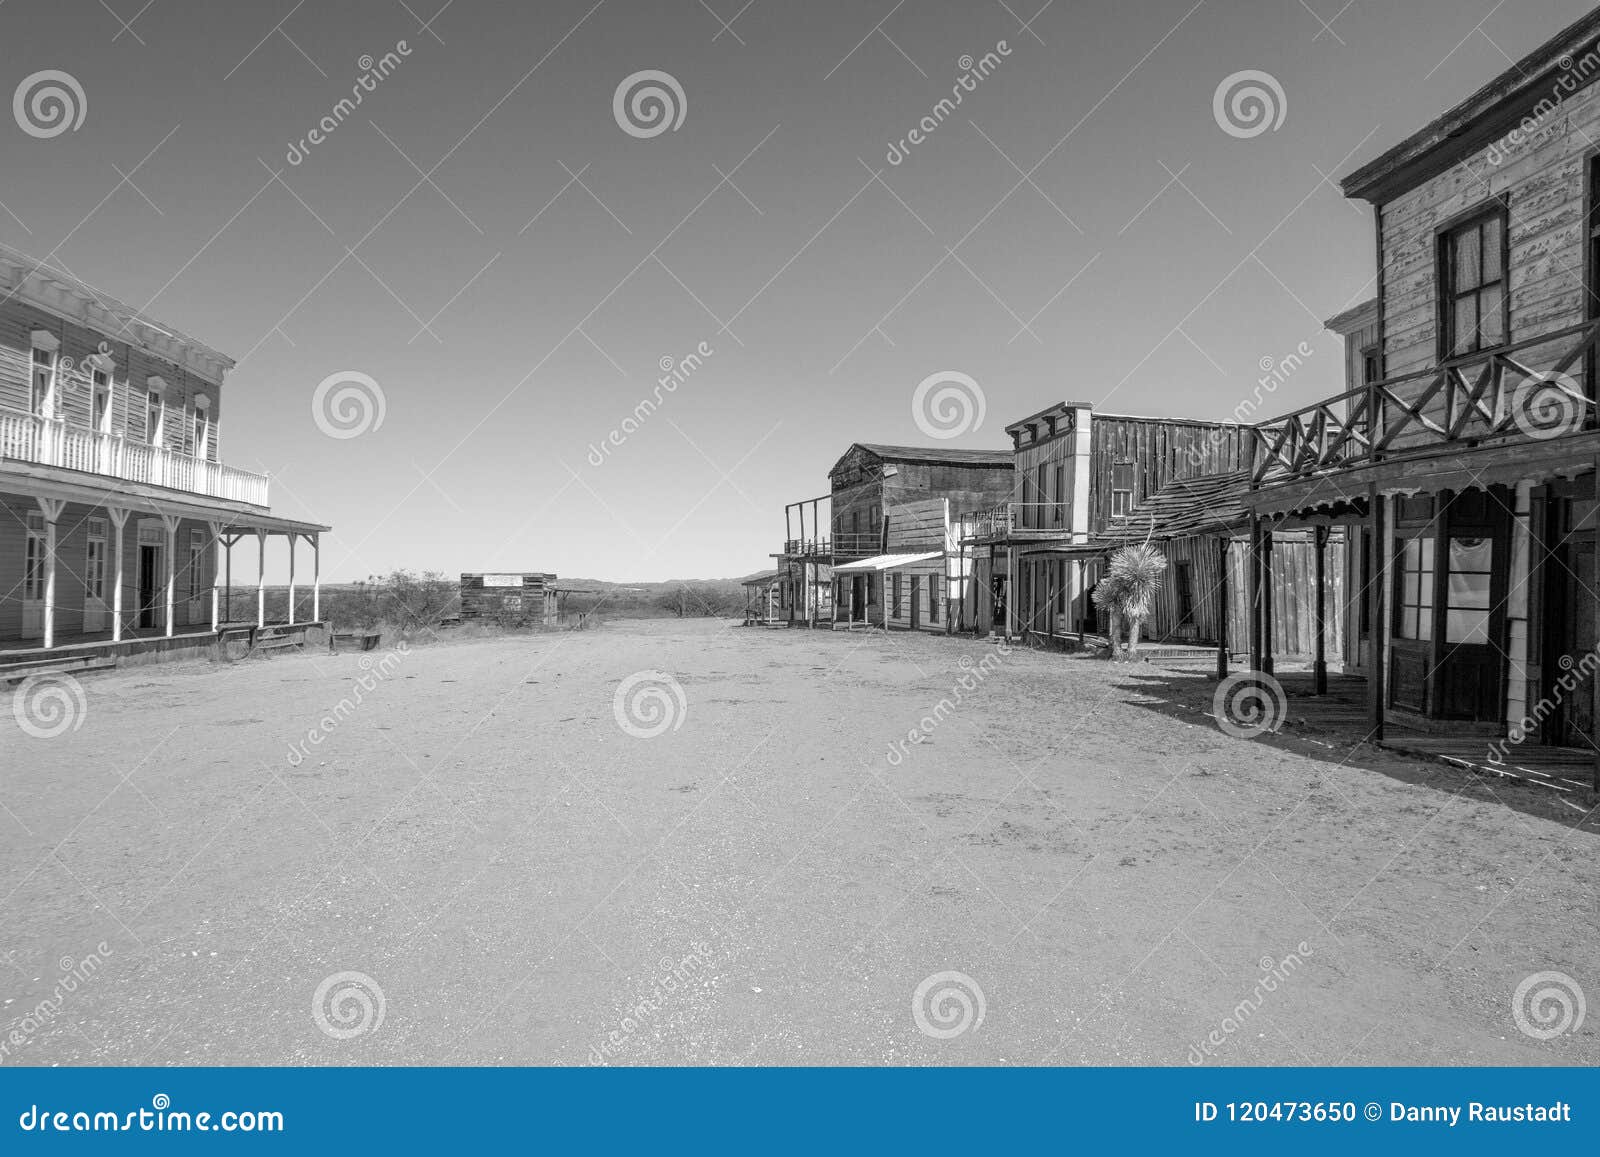 Old Wild West Town Movie Set In Arizona Stock Photo - Image of black, historic: 1204736501300 x 957